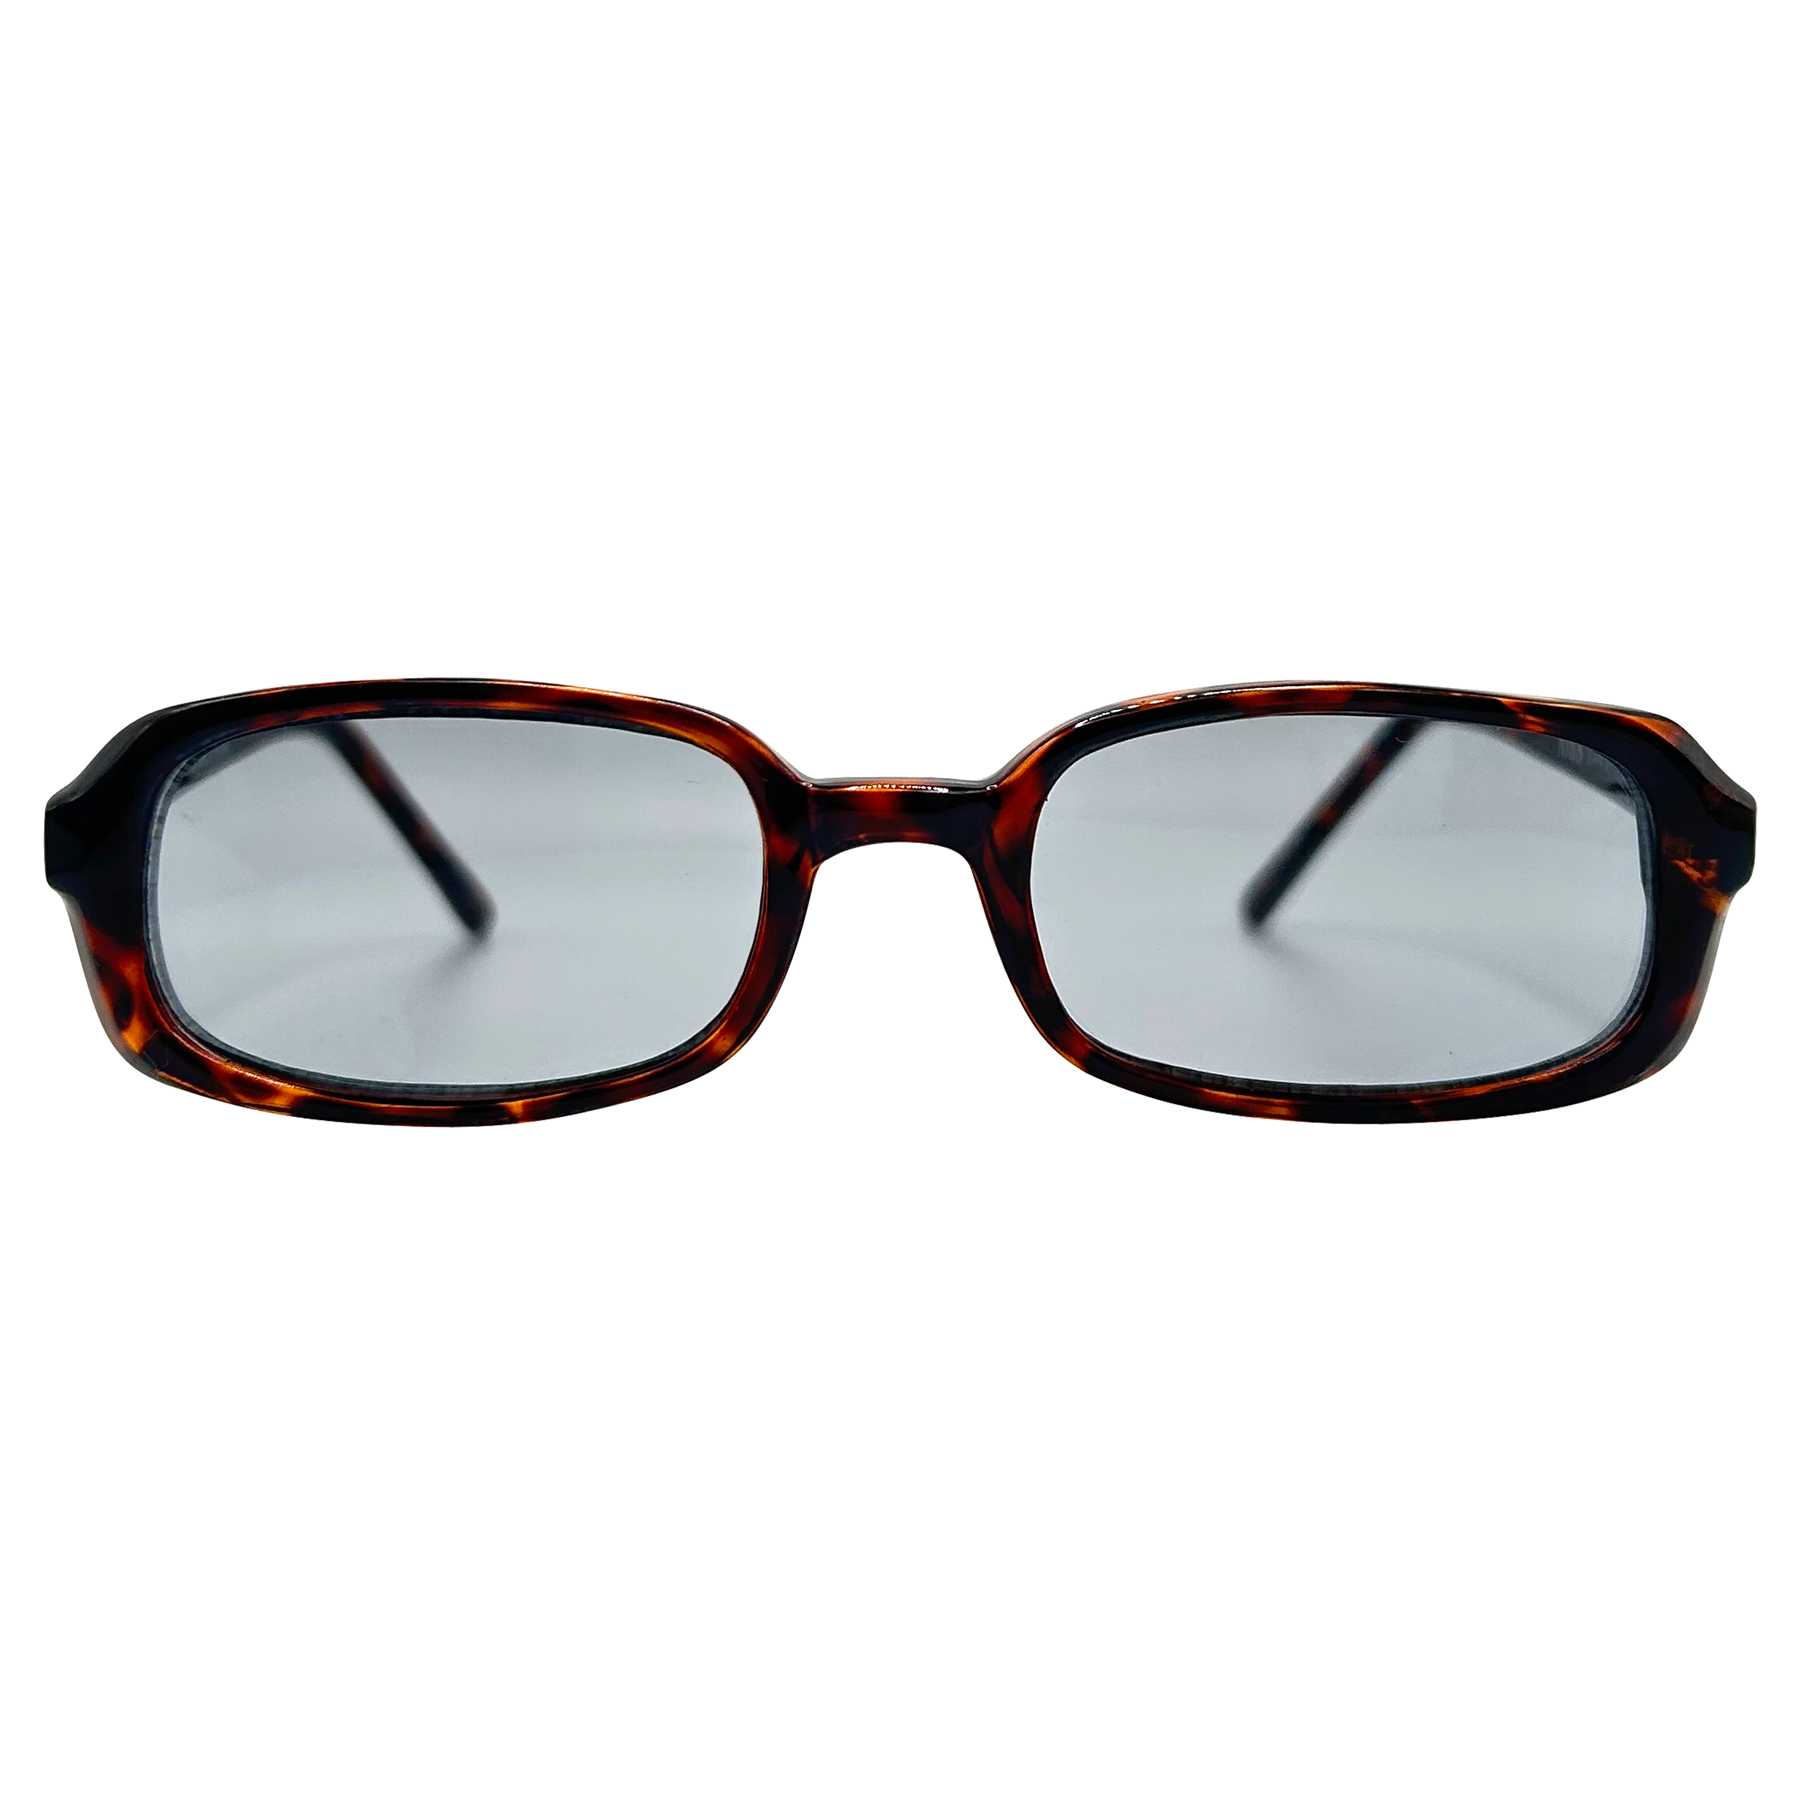 ShadyVEU Super Dark Oversize Sunglasses UV400 Protection X-Large Flat Top  Classic Fashion Shades | Eyewear womens, Sunglasses, Uv400 sunglasses